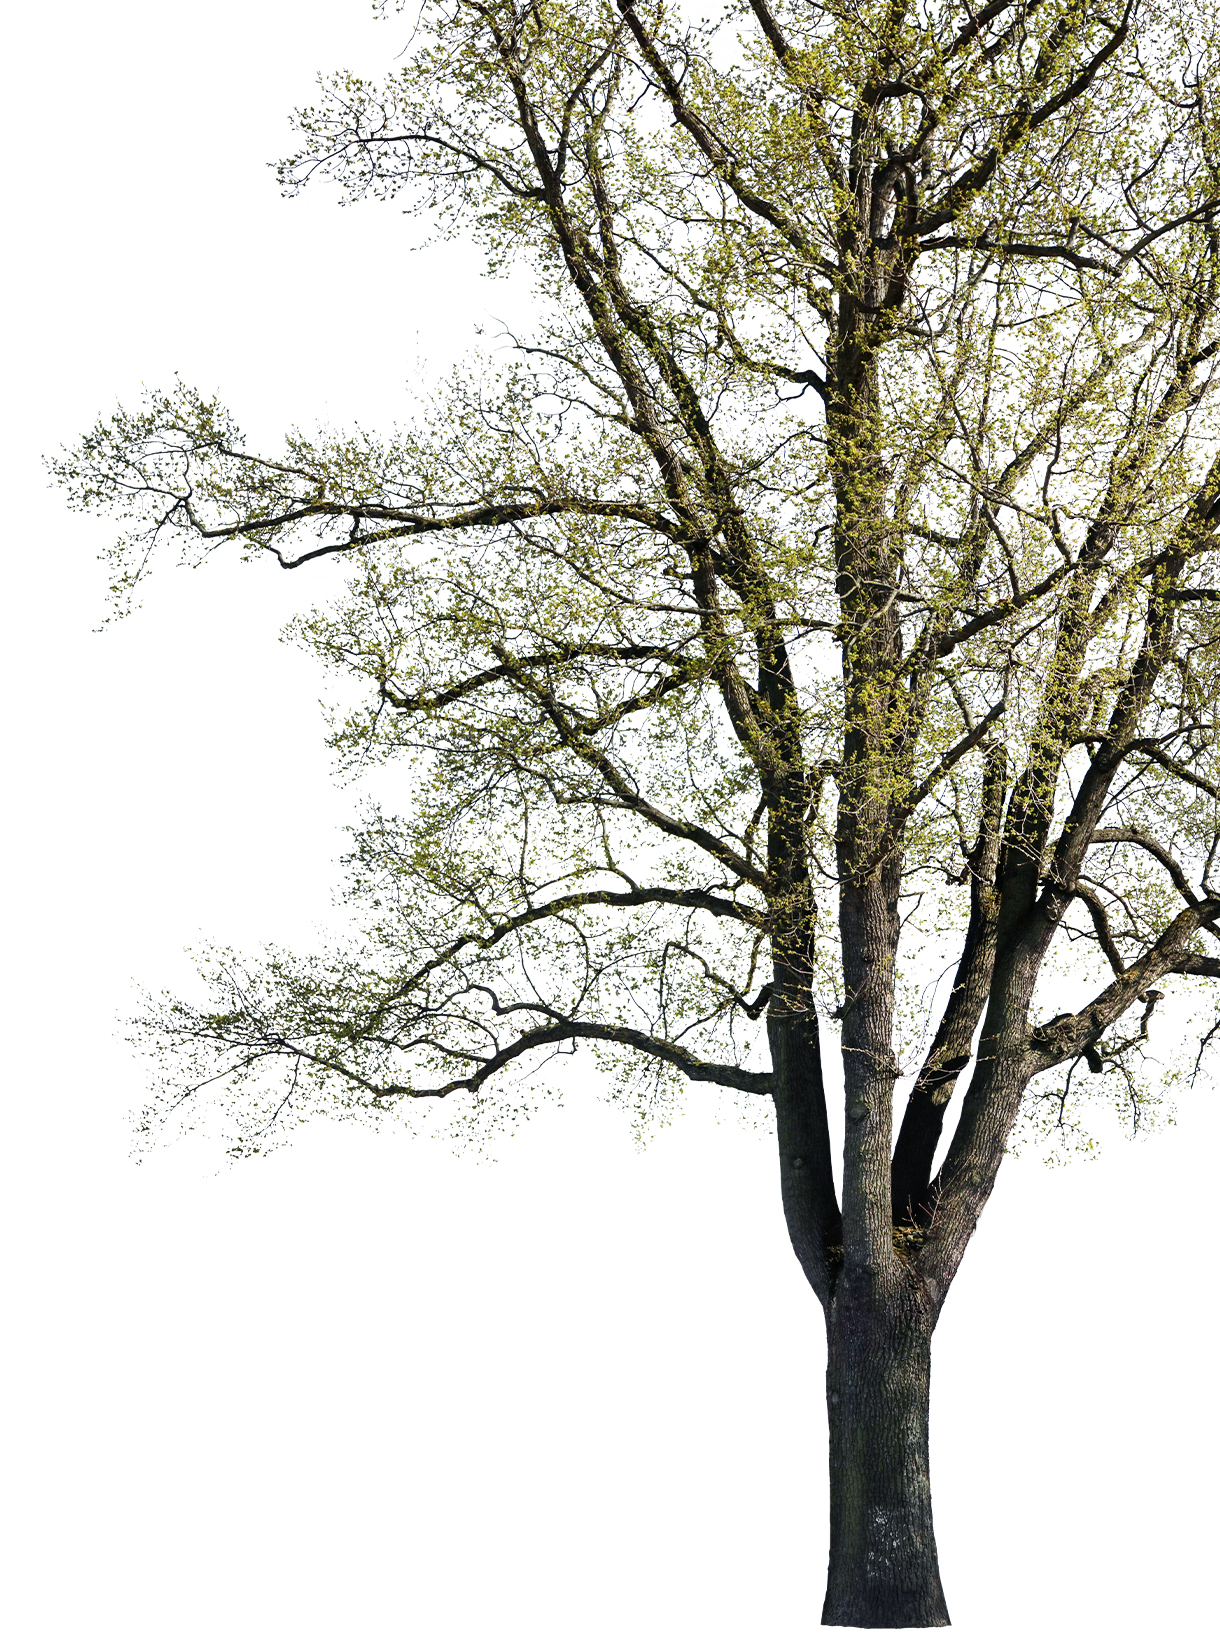 Quercus robur l02